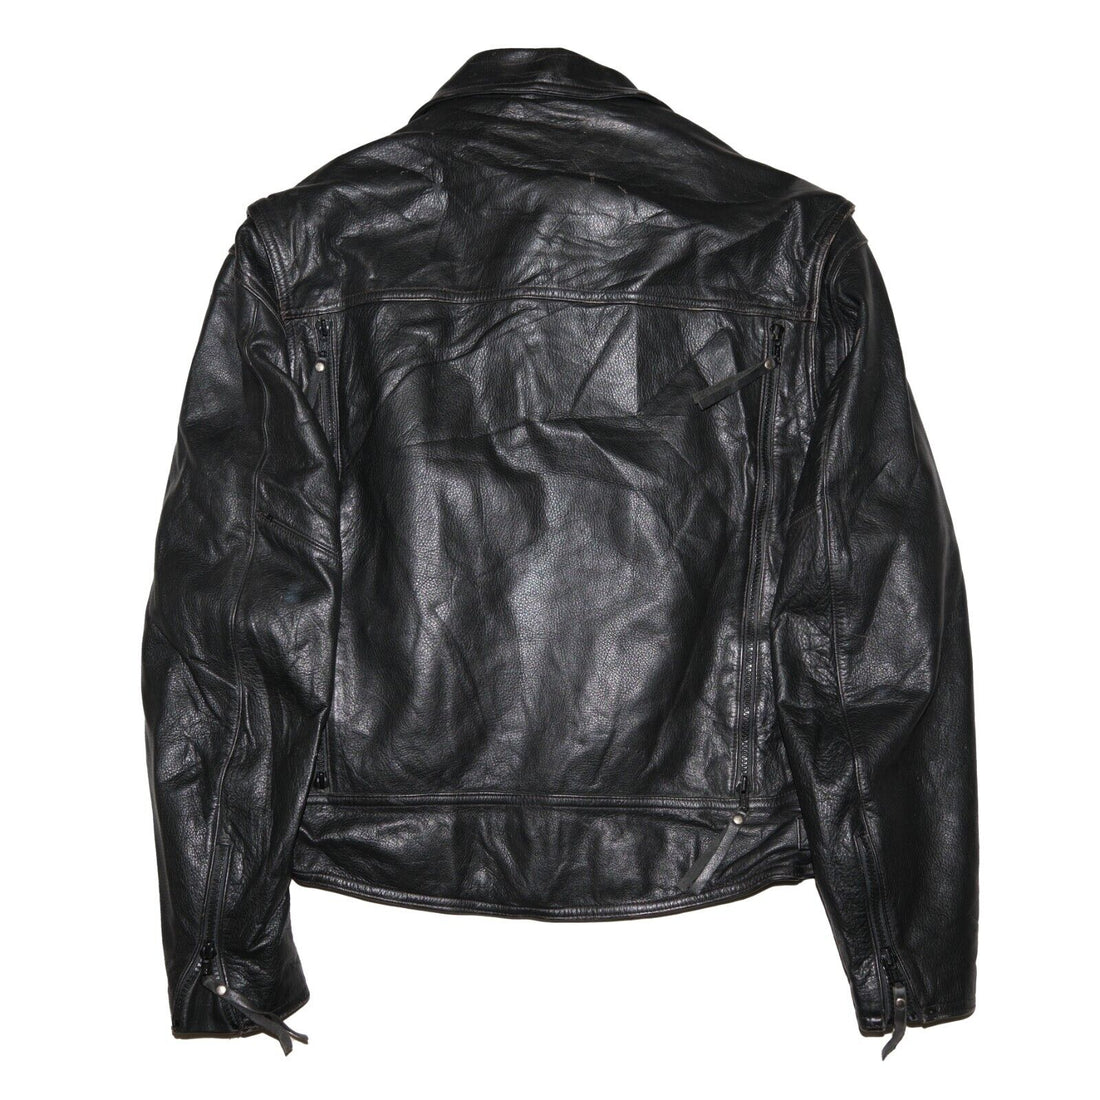 Vintage Harley Davidson Leather Classic Motorcycle Jacket Size Large Black Biker